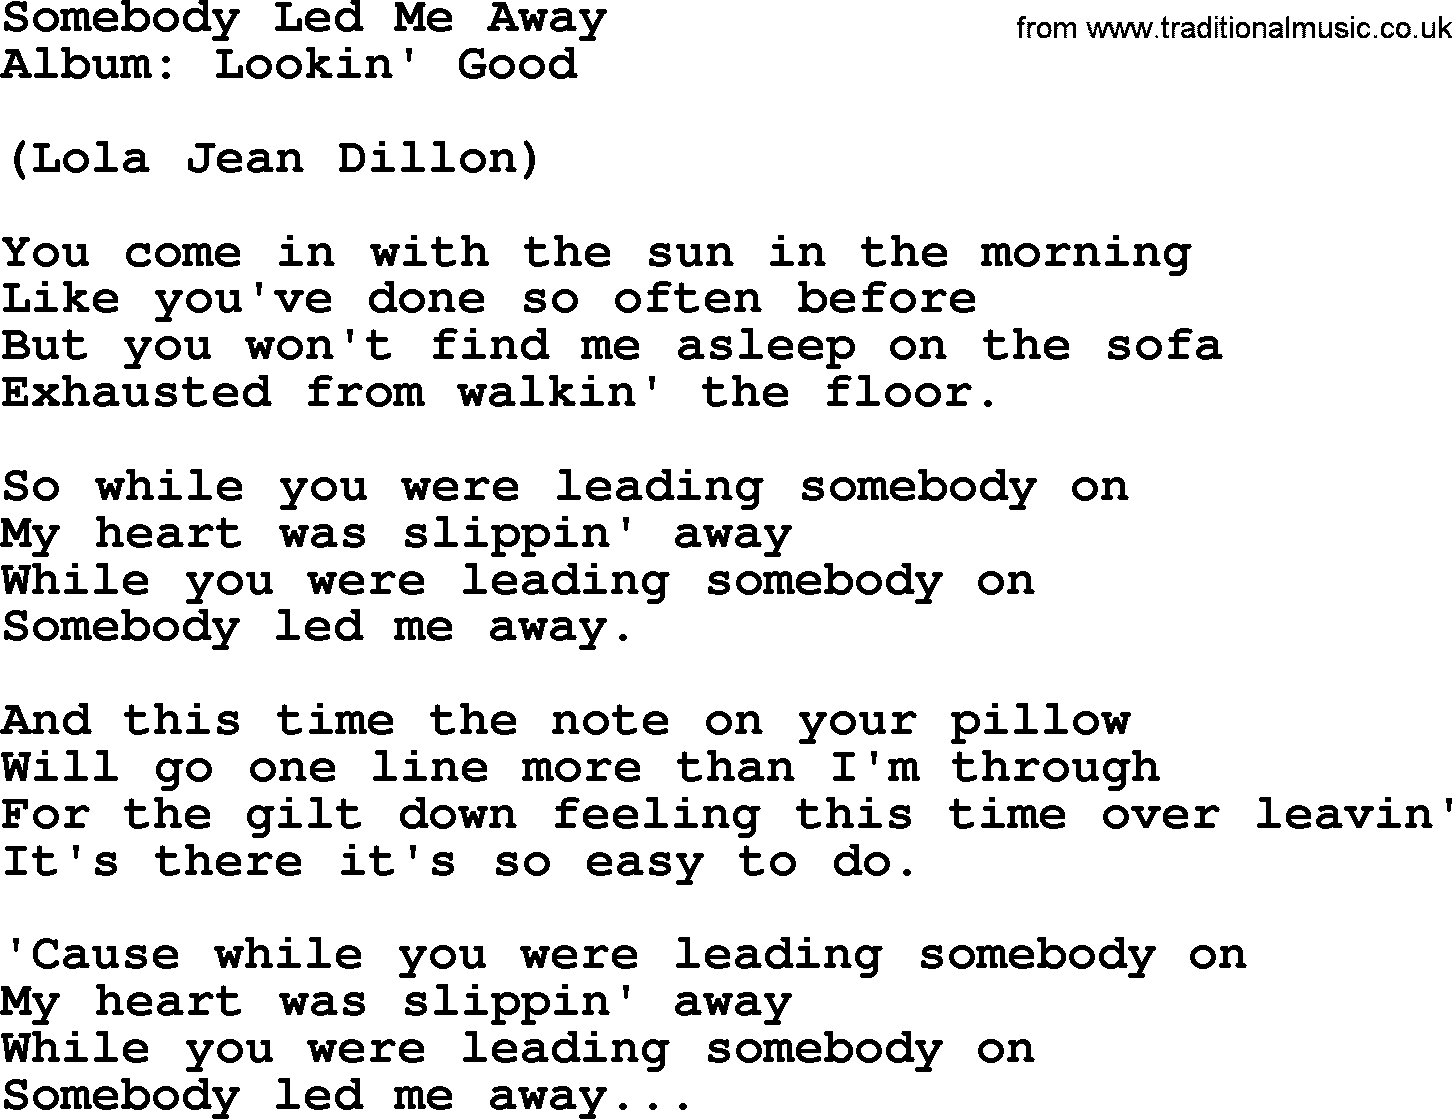 Loretta Lynn song: Somebody Led Me Away lyrics